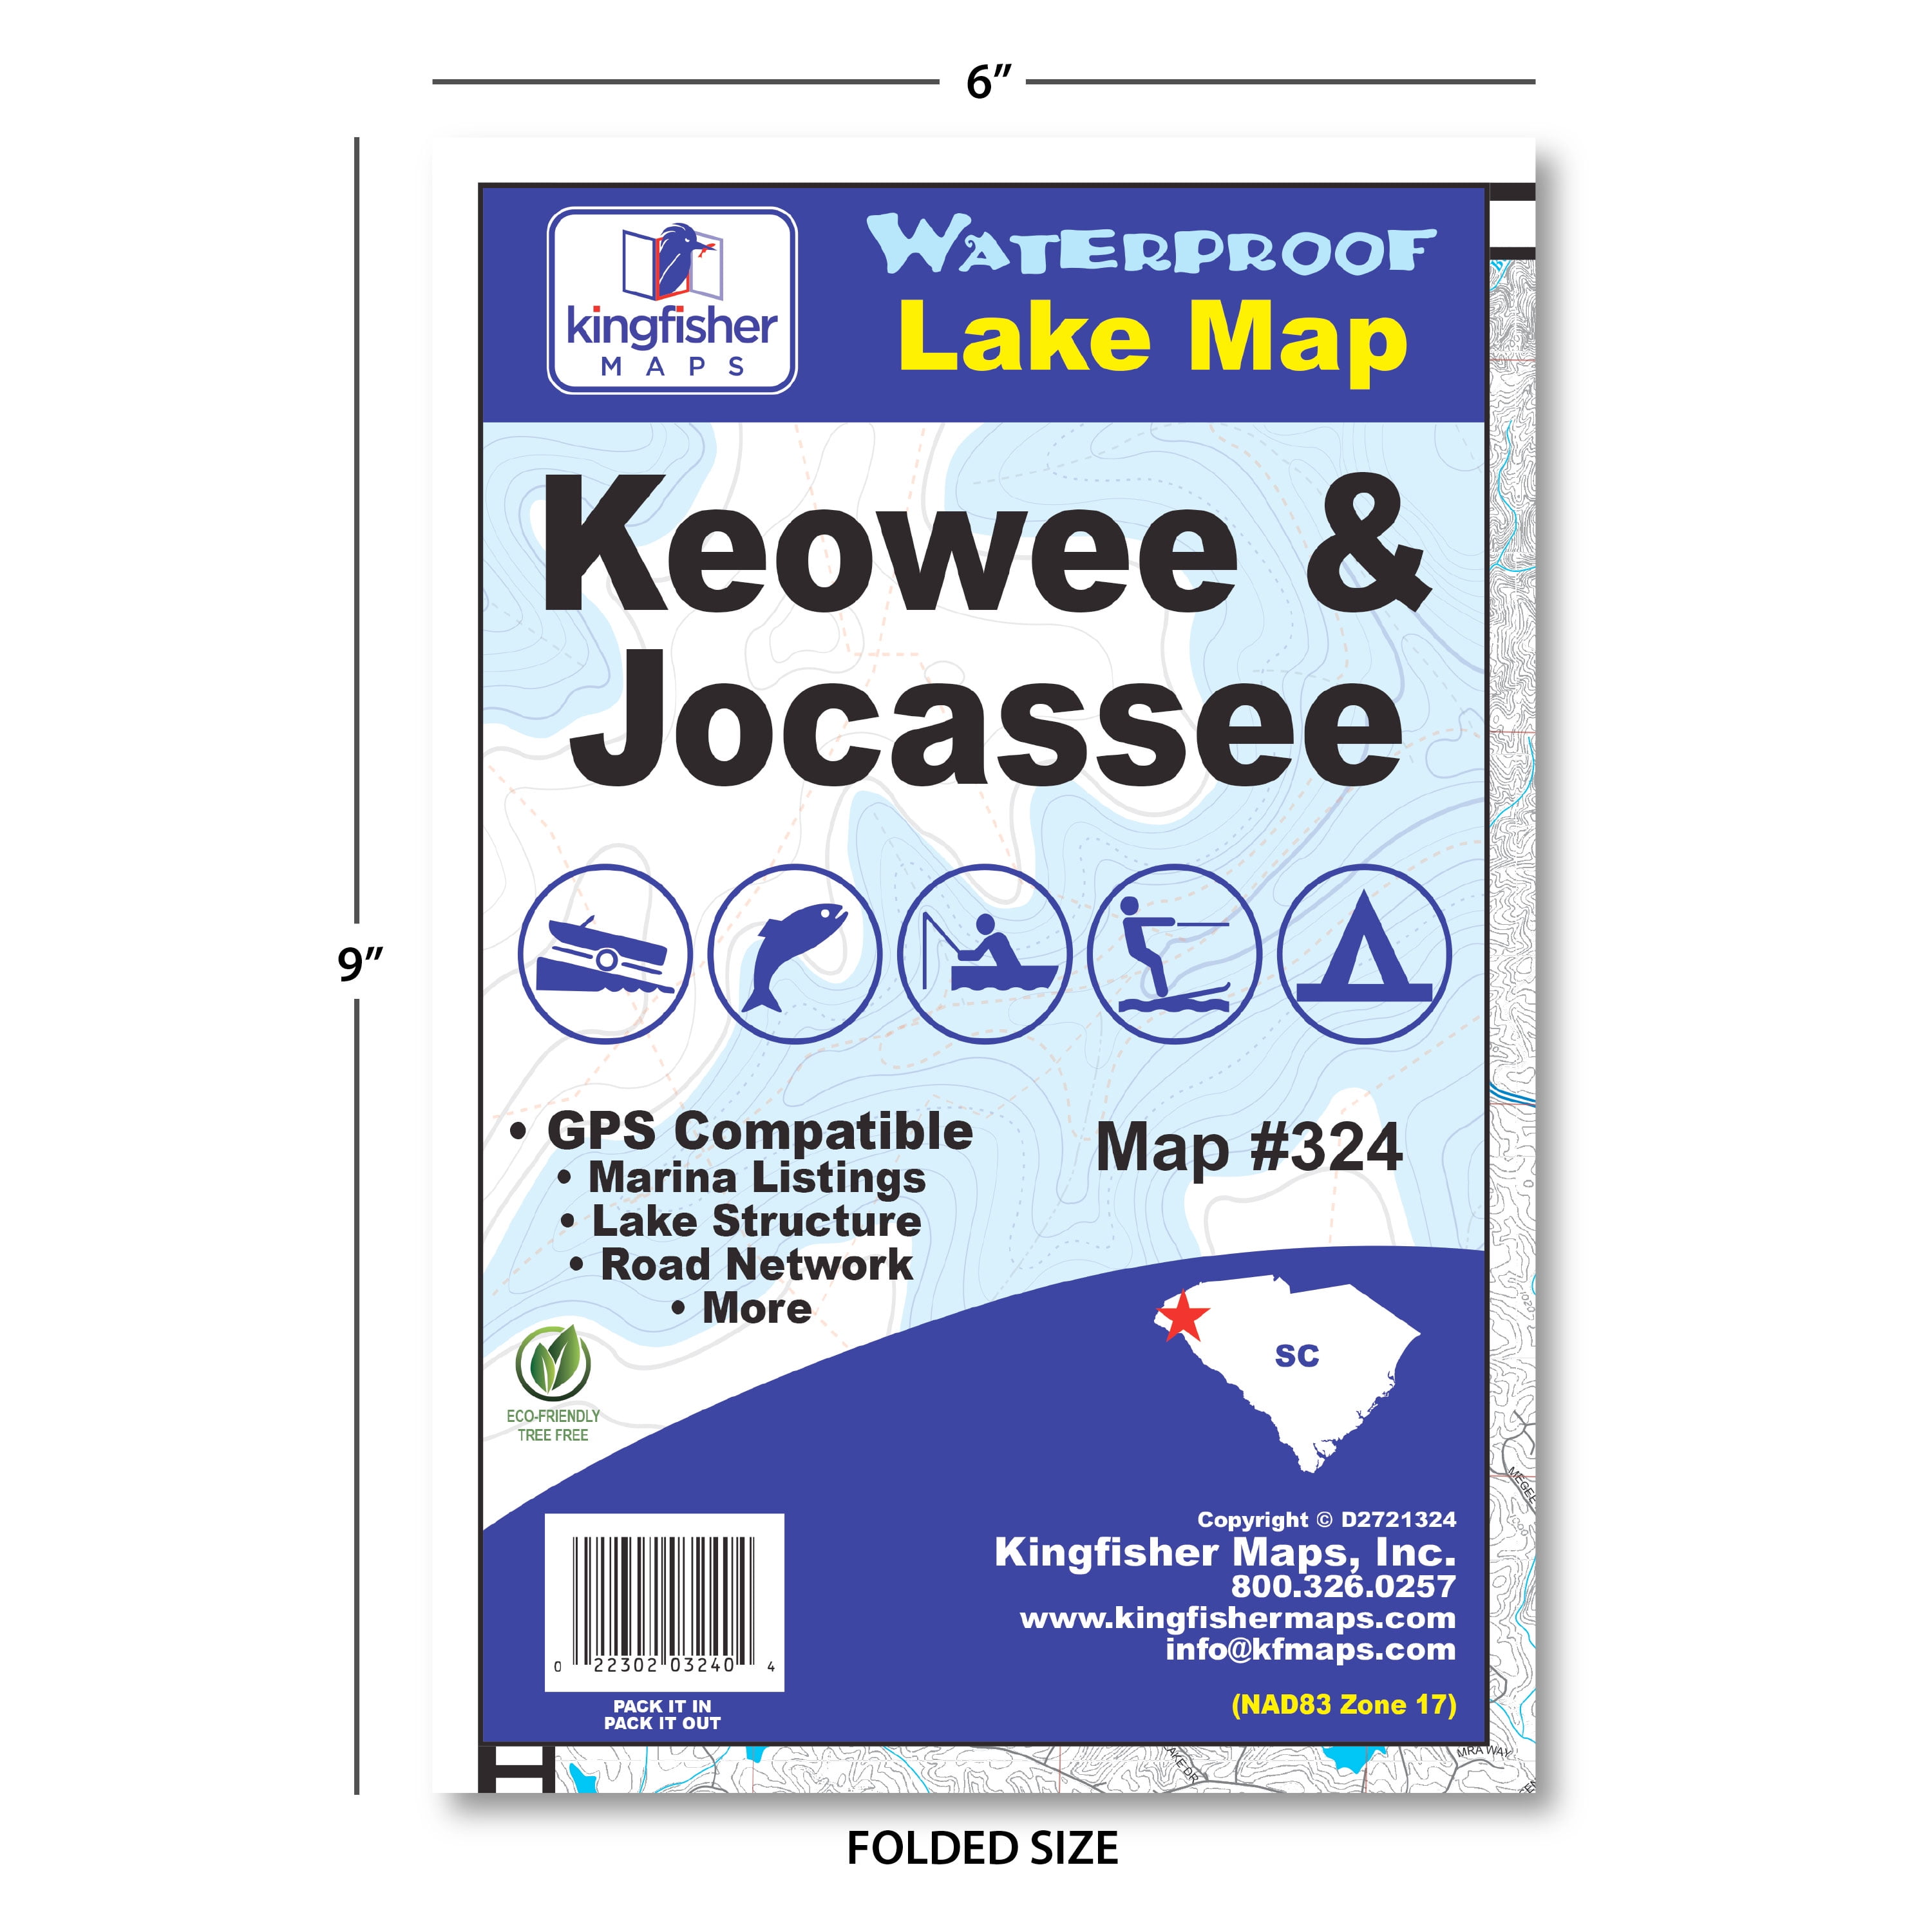 Kingfisher Maps Waterproof Lake Map Keowee & Jocassee SC, 24x36 0.2lb